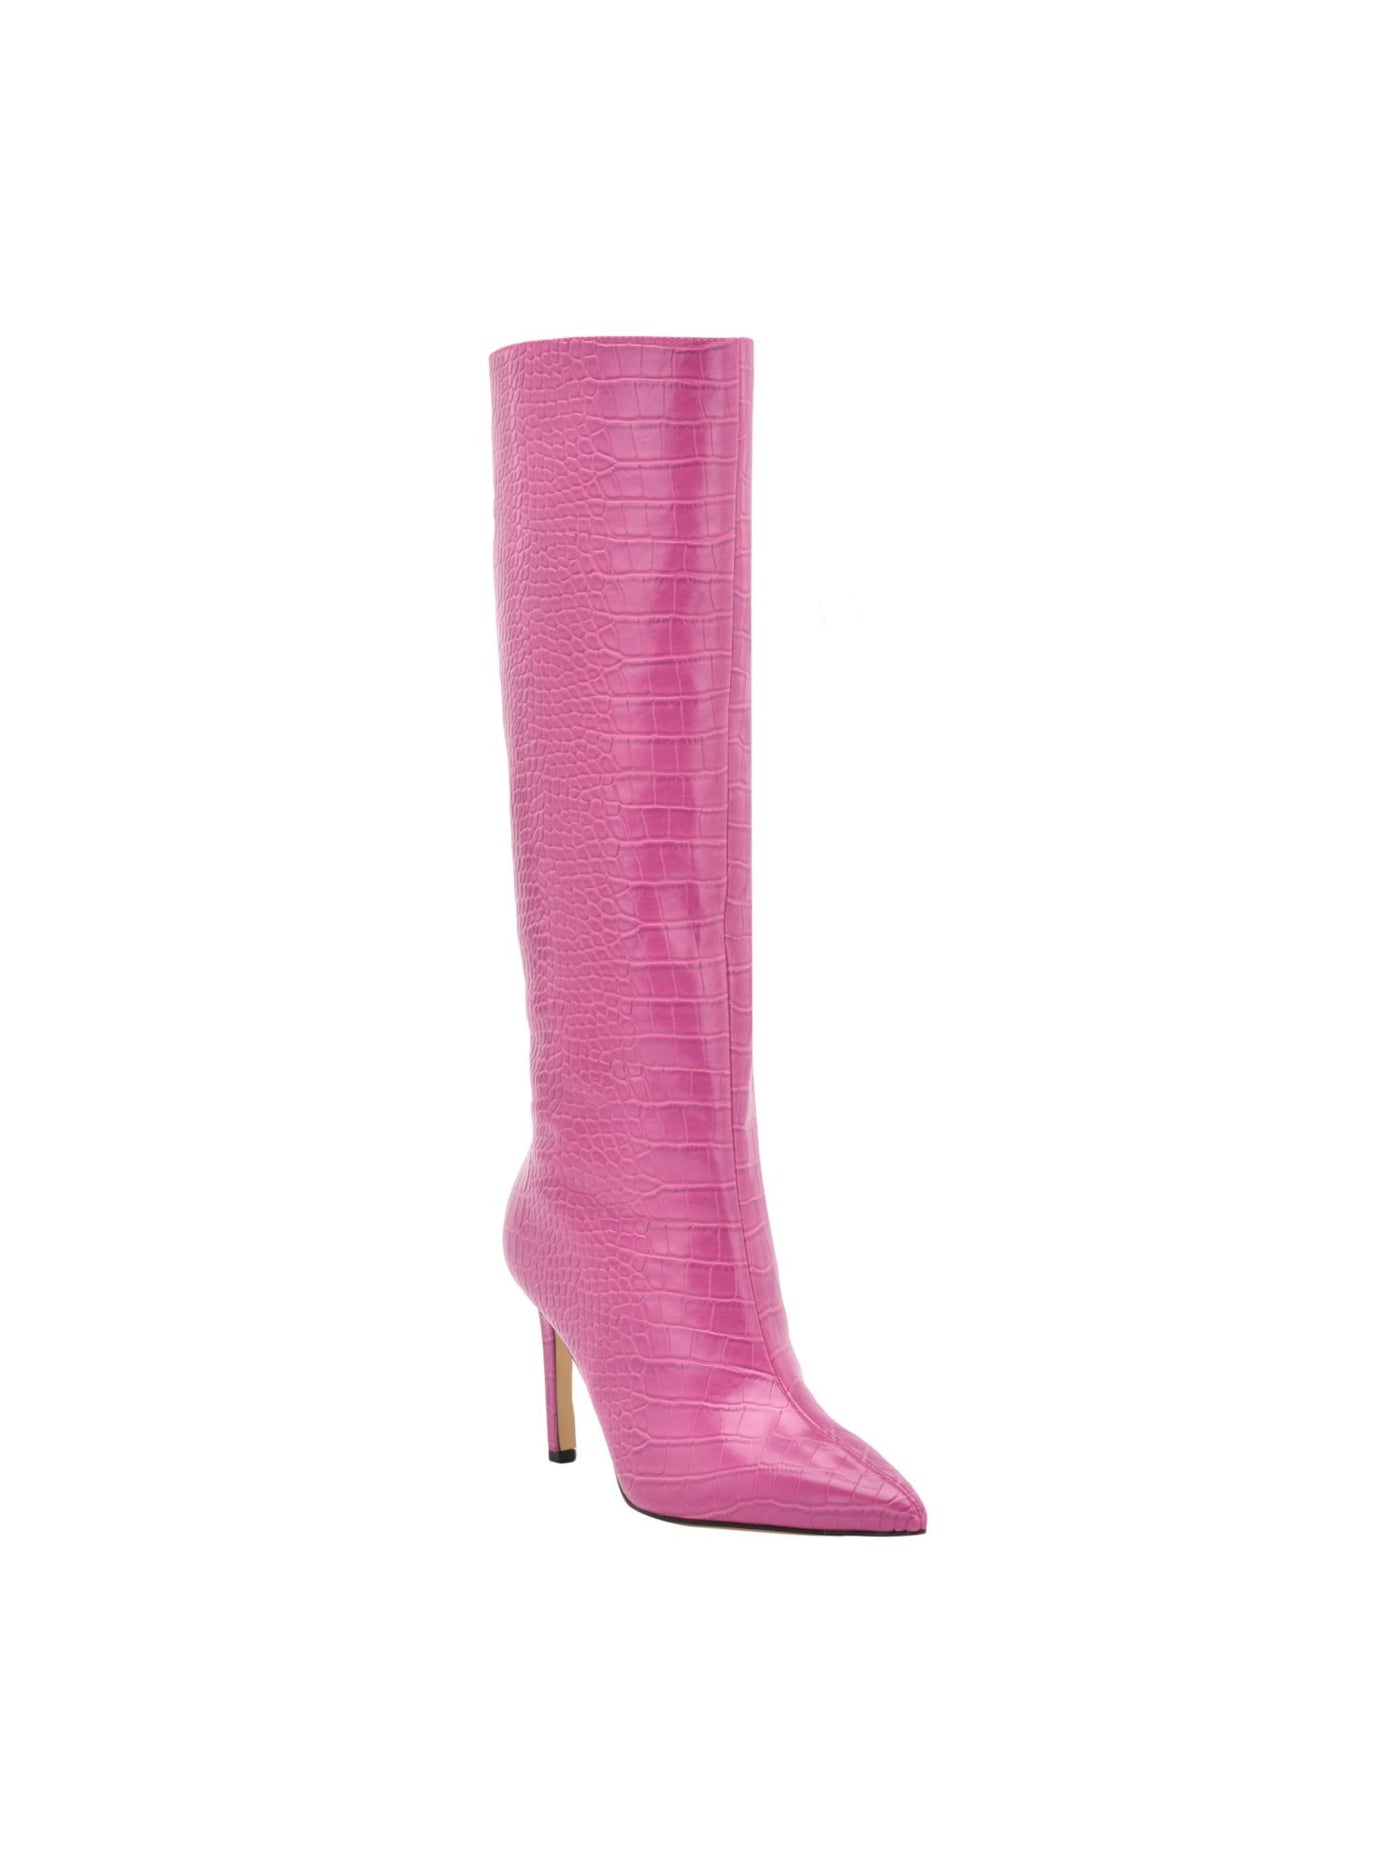 GUESS Womens Pink Animal Print Padded Dayton Pointy Toe Stiletto Dress Boots 9 M